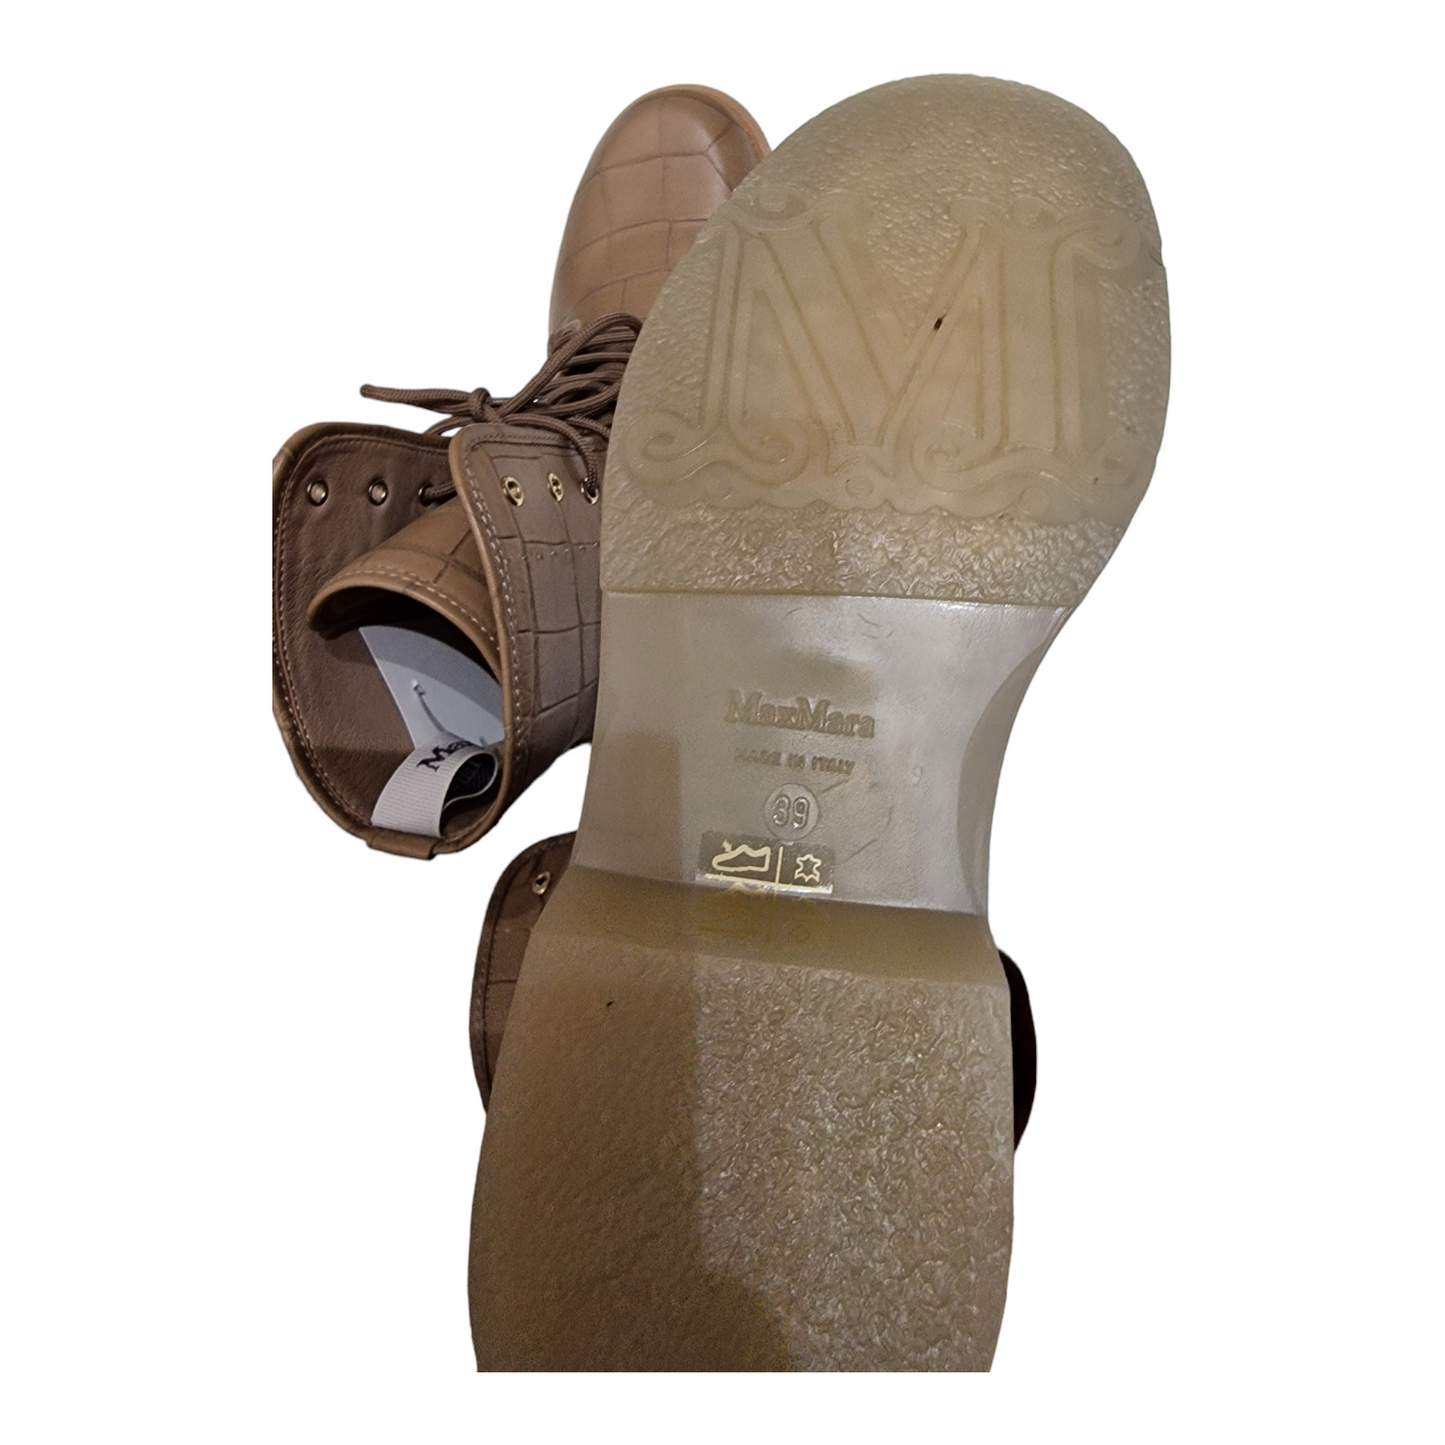 Max Mara Tan leather combat boots, size 6, brand new